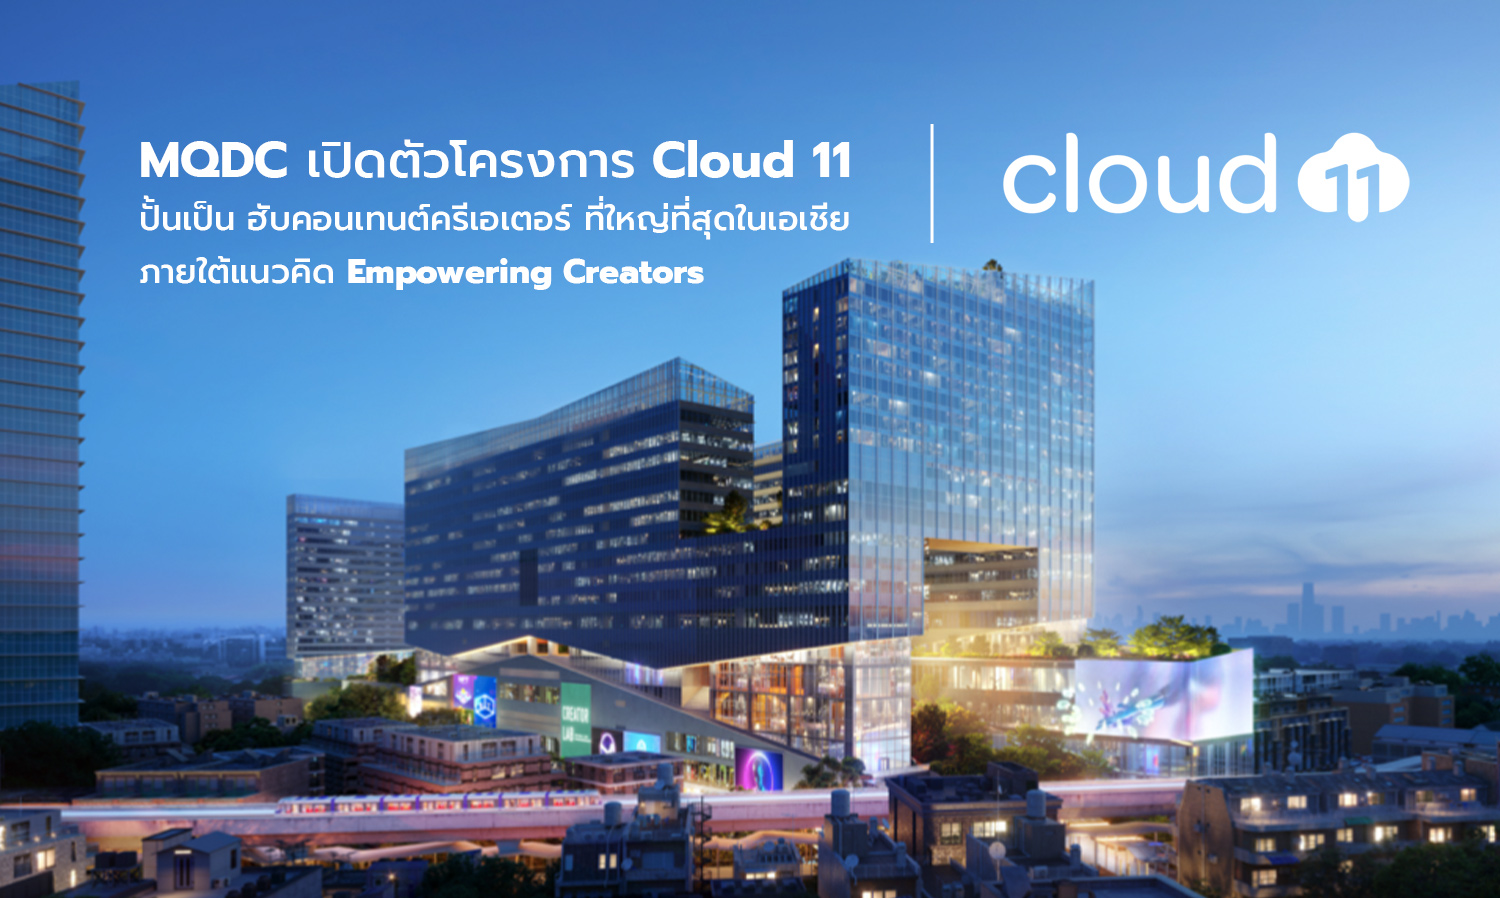 MQDC เปิดตัวโครงการ Cloud 11 ปั้นเป็น ฮับคอนเทนต์ครีเอเตอร์ ที่ใหญ่ที่สุดในเอเชีย ภายใต้แนวคิด Empowering Creators